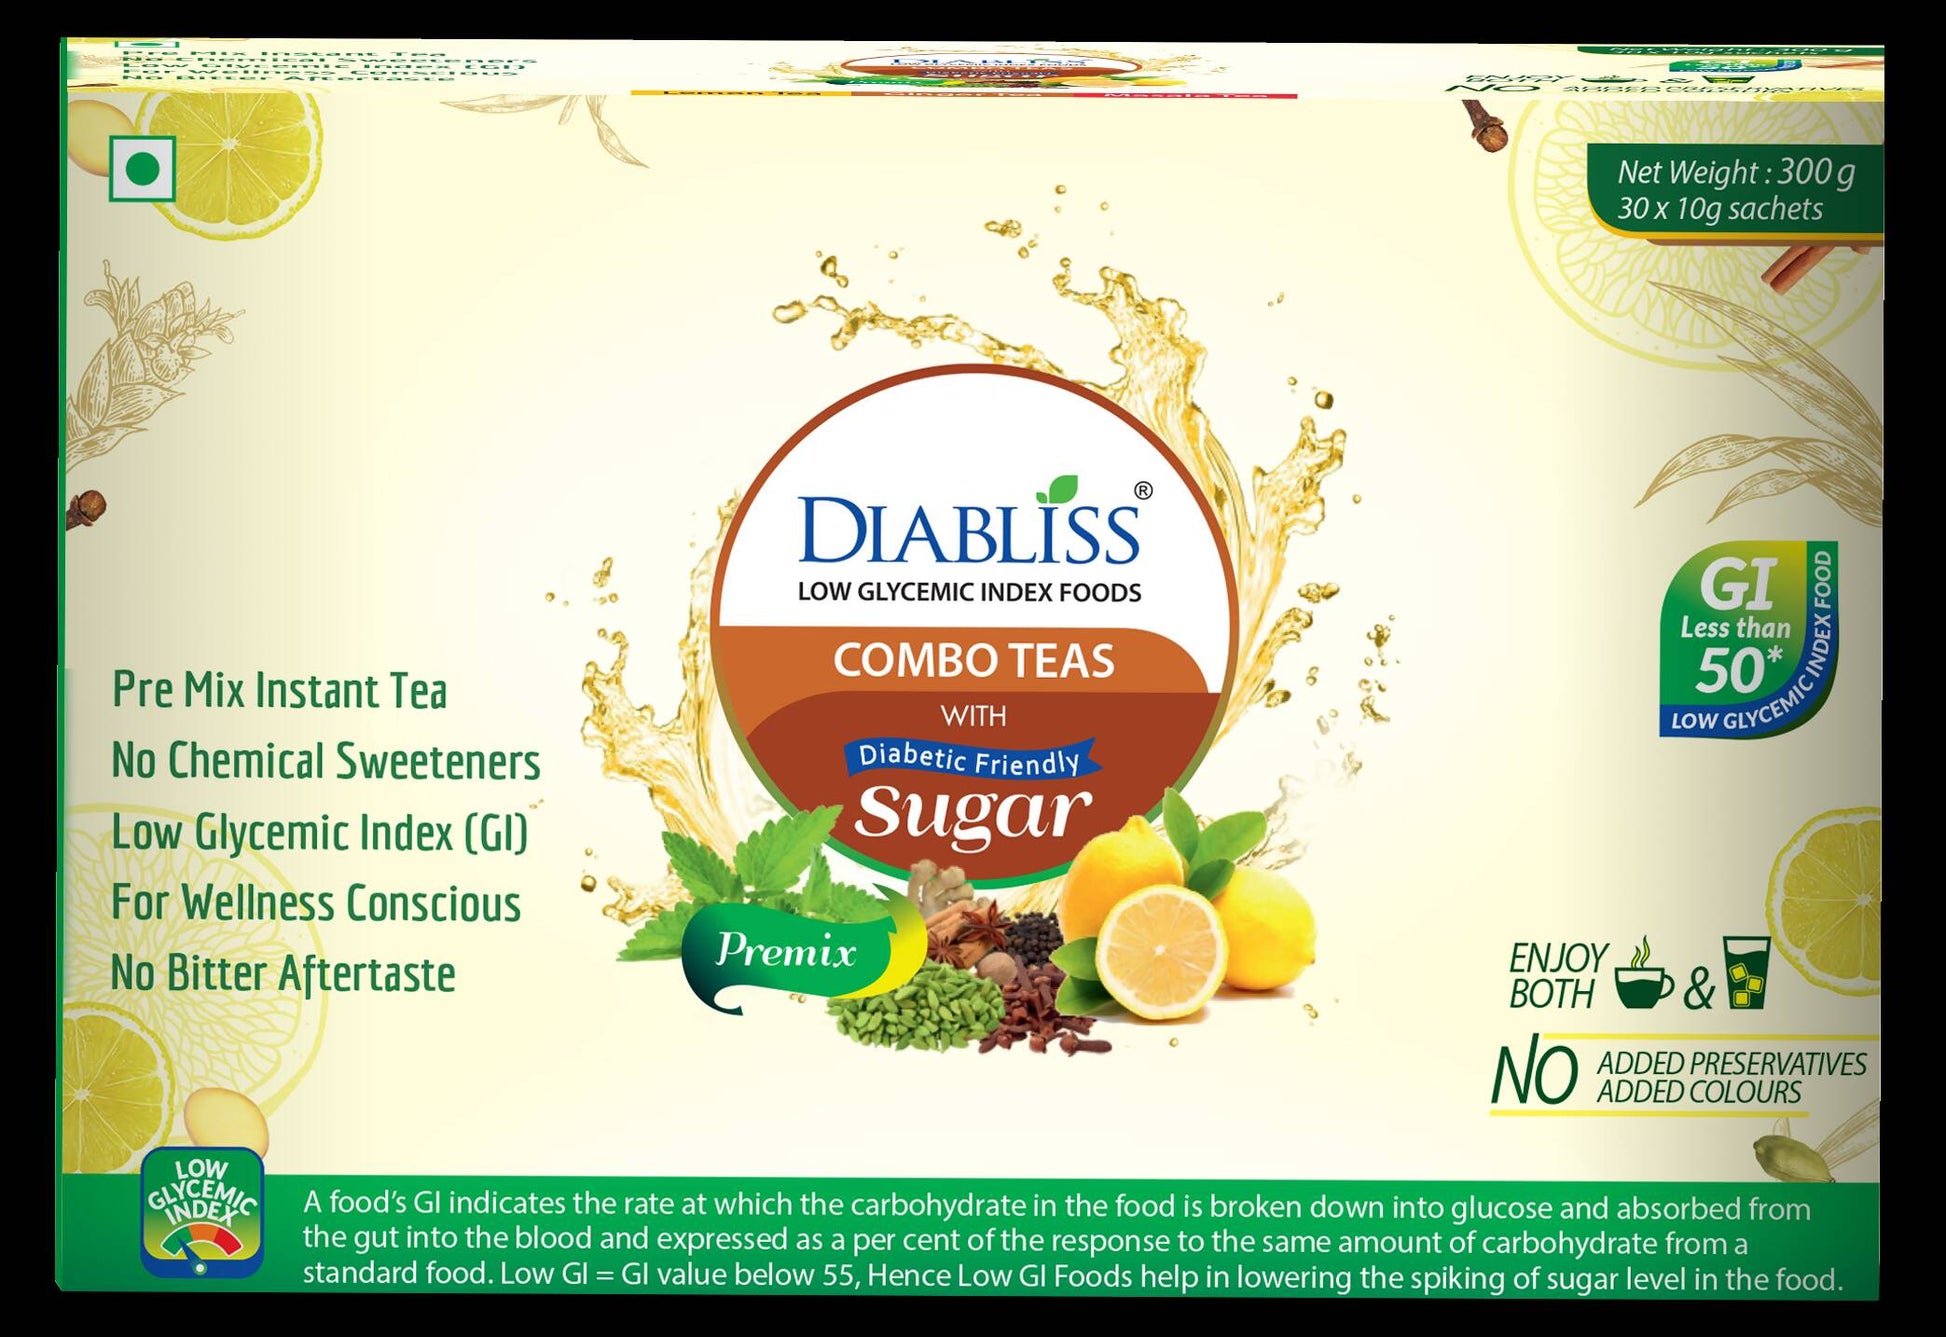 Diabliss Combo Teas with Diabetic Friendly Sugar - BUDNE